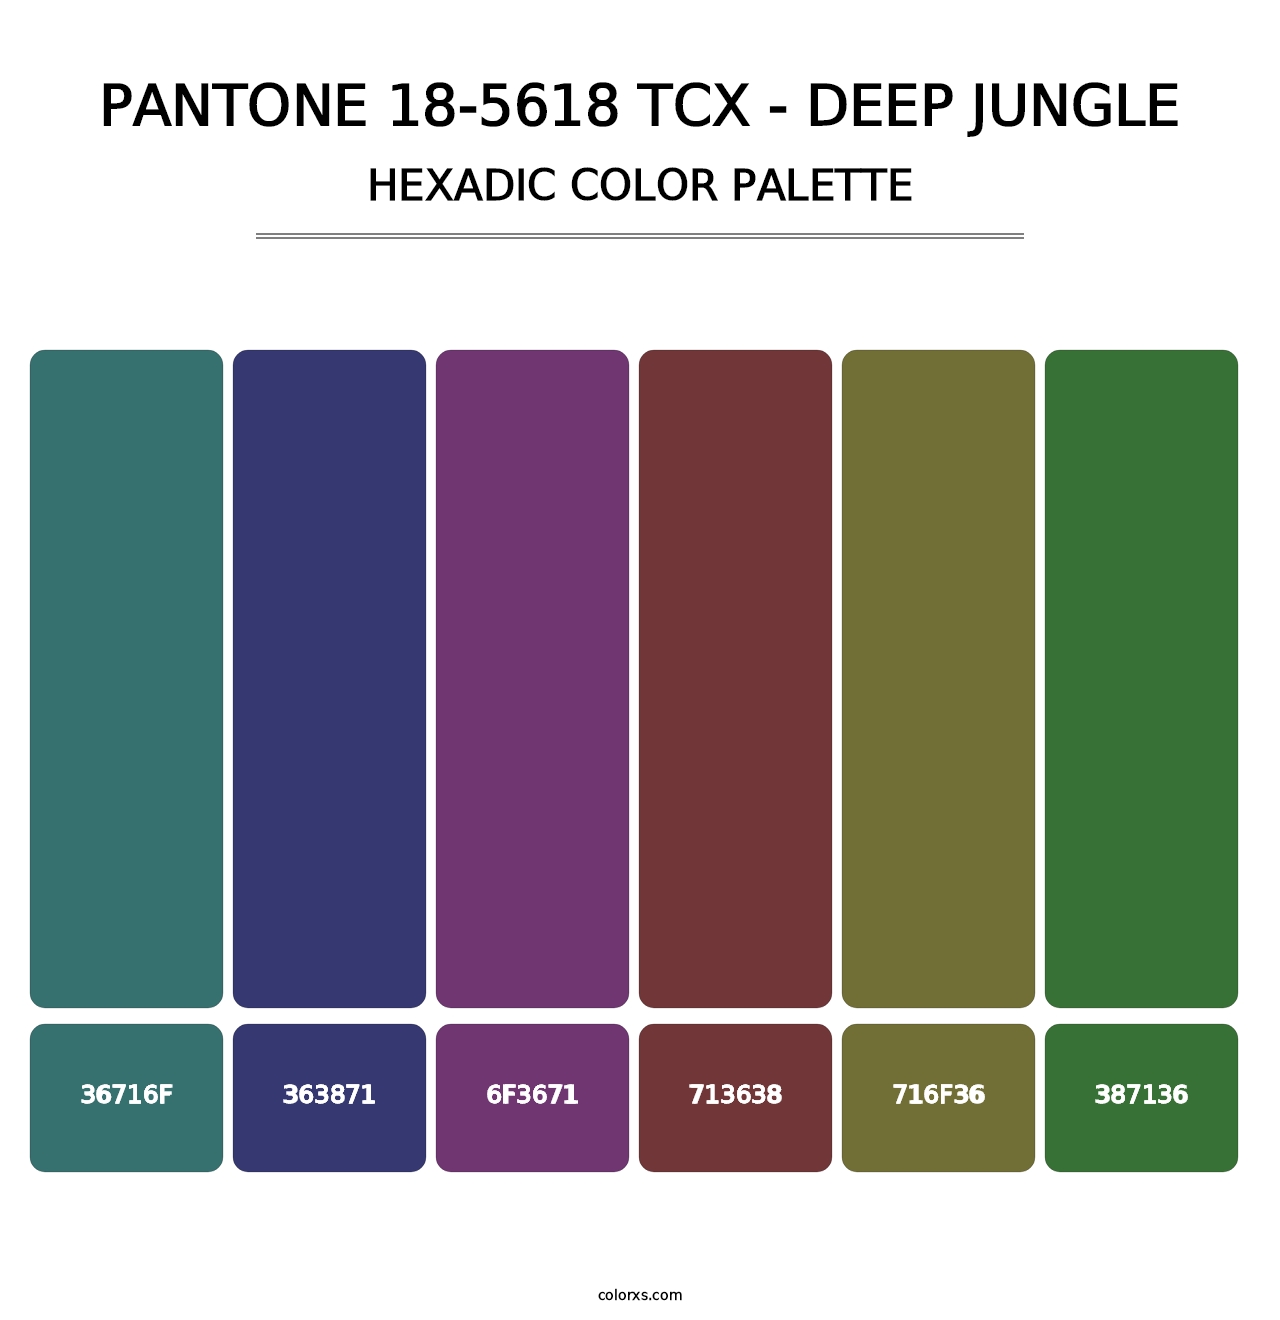 PANTONE 18-5618 TCX - Deep Jungle - Hexadic Color Palette